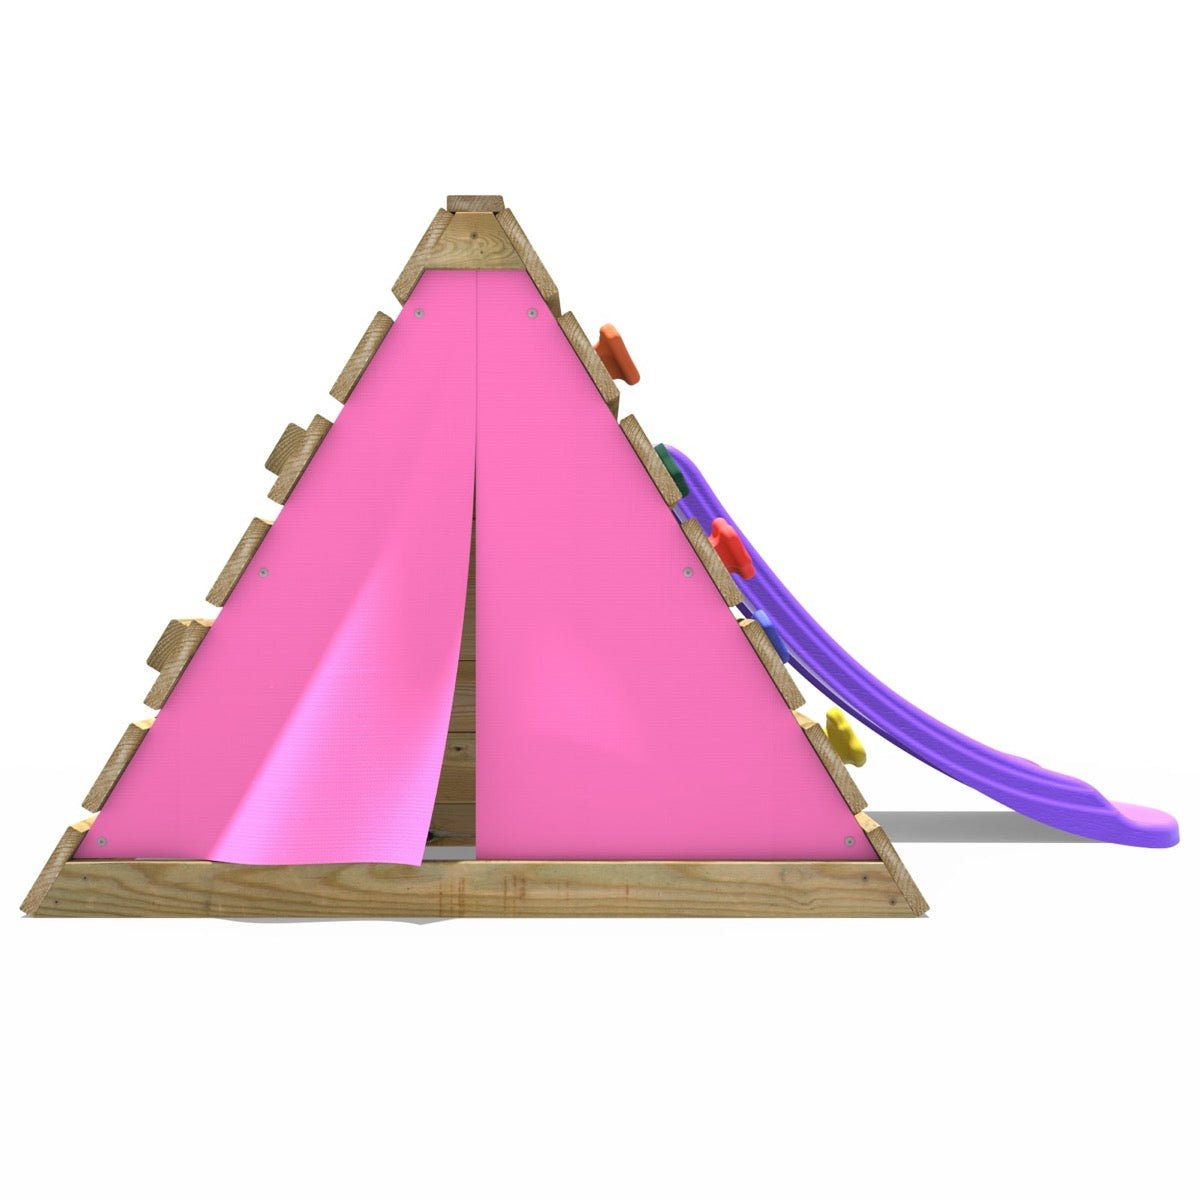 Rebo Mini Wooden Climbing Pyramid Adventure Playset + Slide - Pink